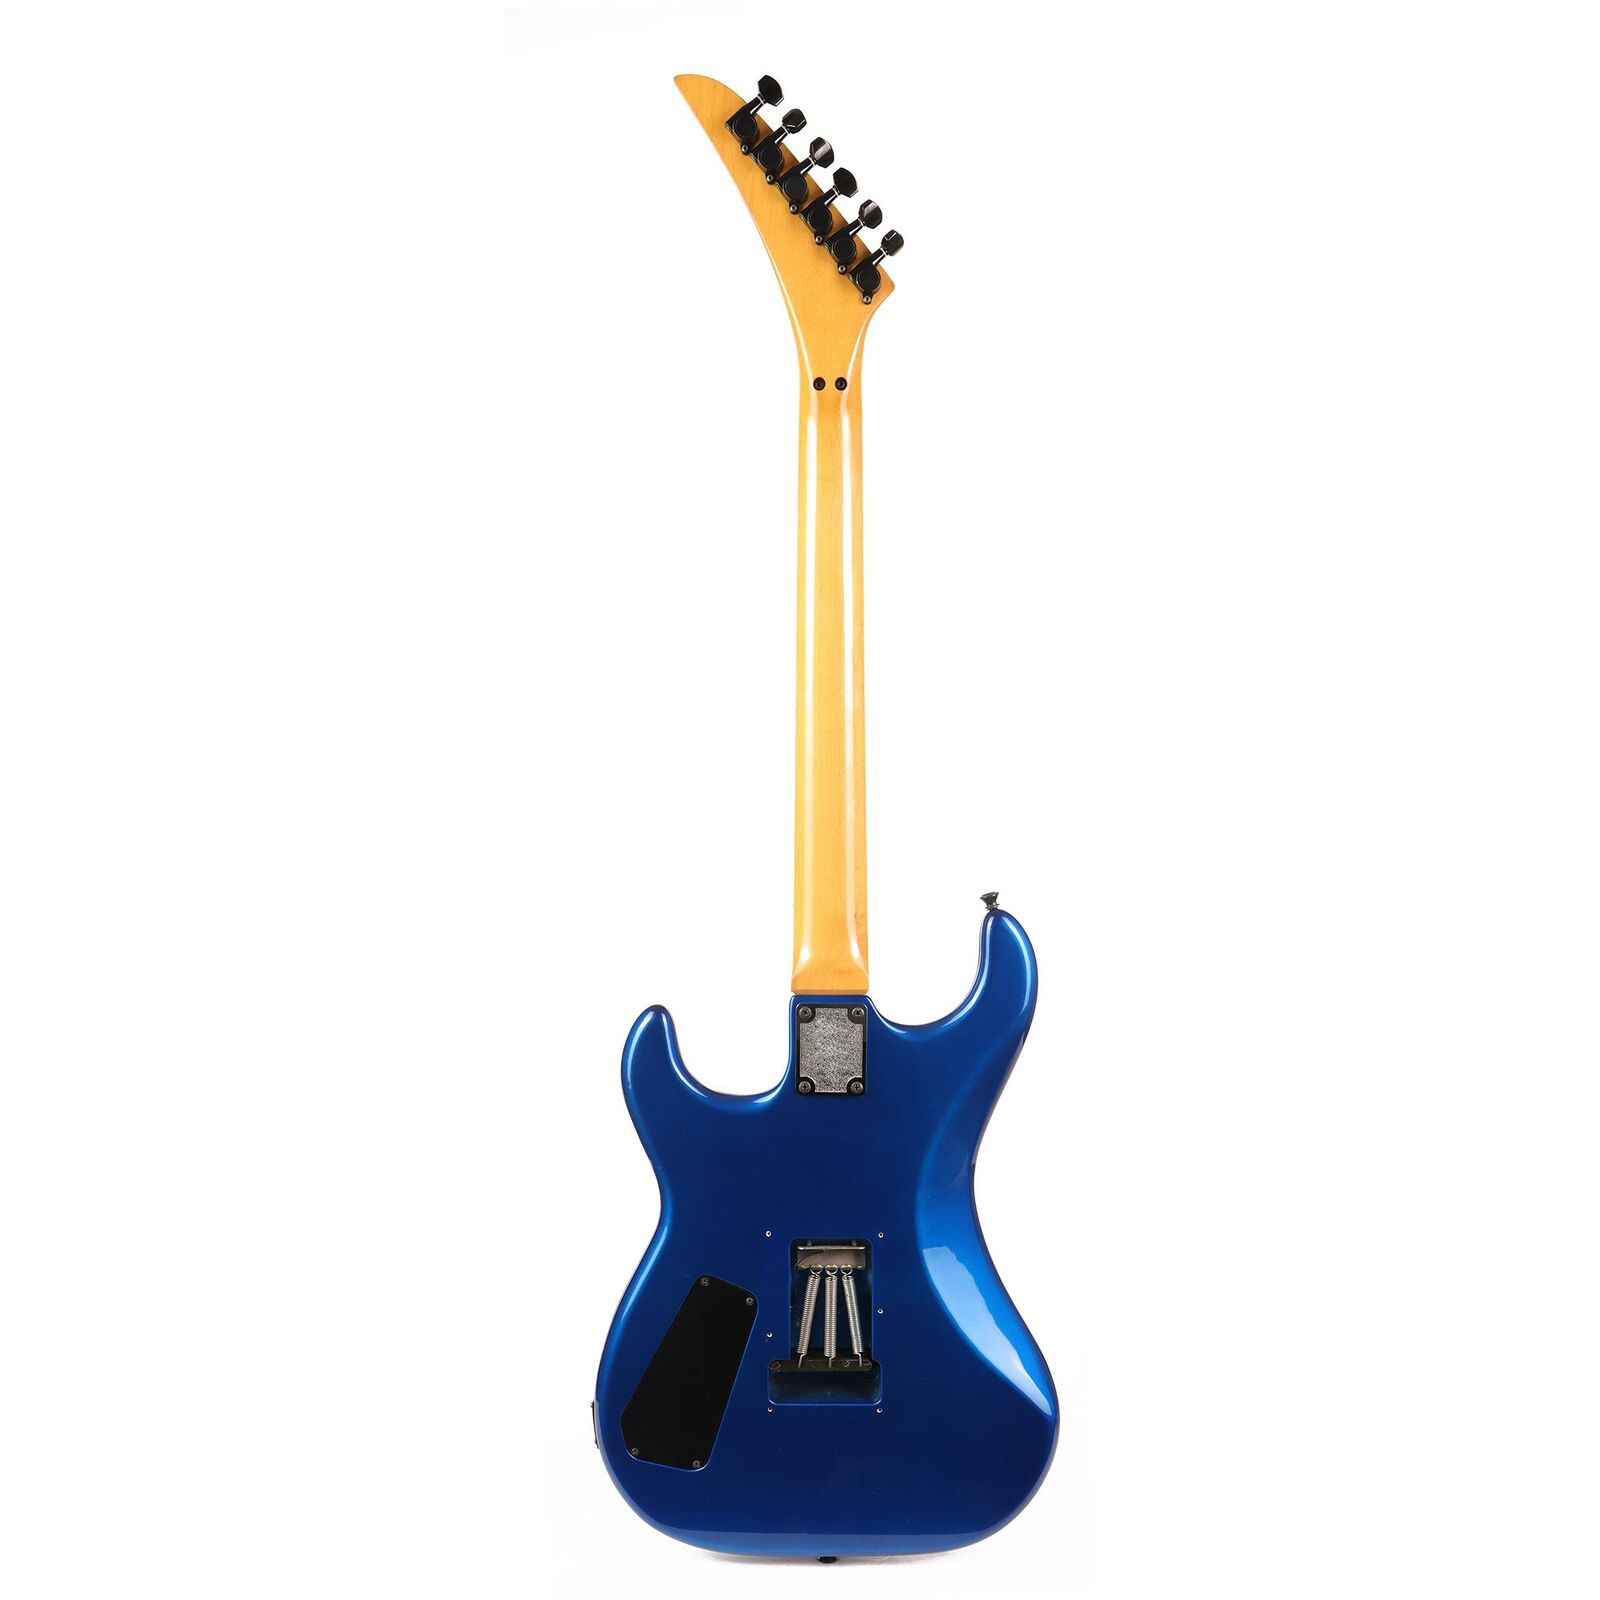 Kr Am er Ek-1bf Candy Blue Electric Guitar jako ta sama na zdjęciach